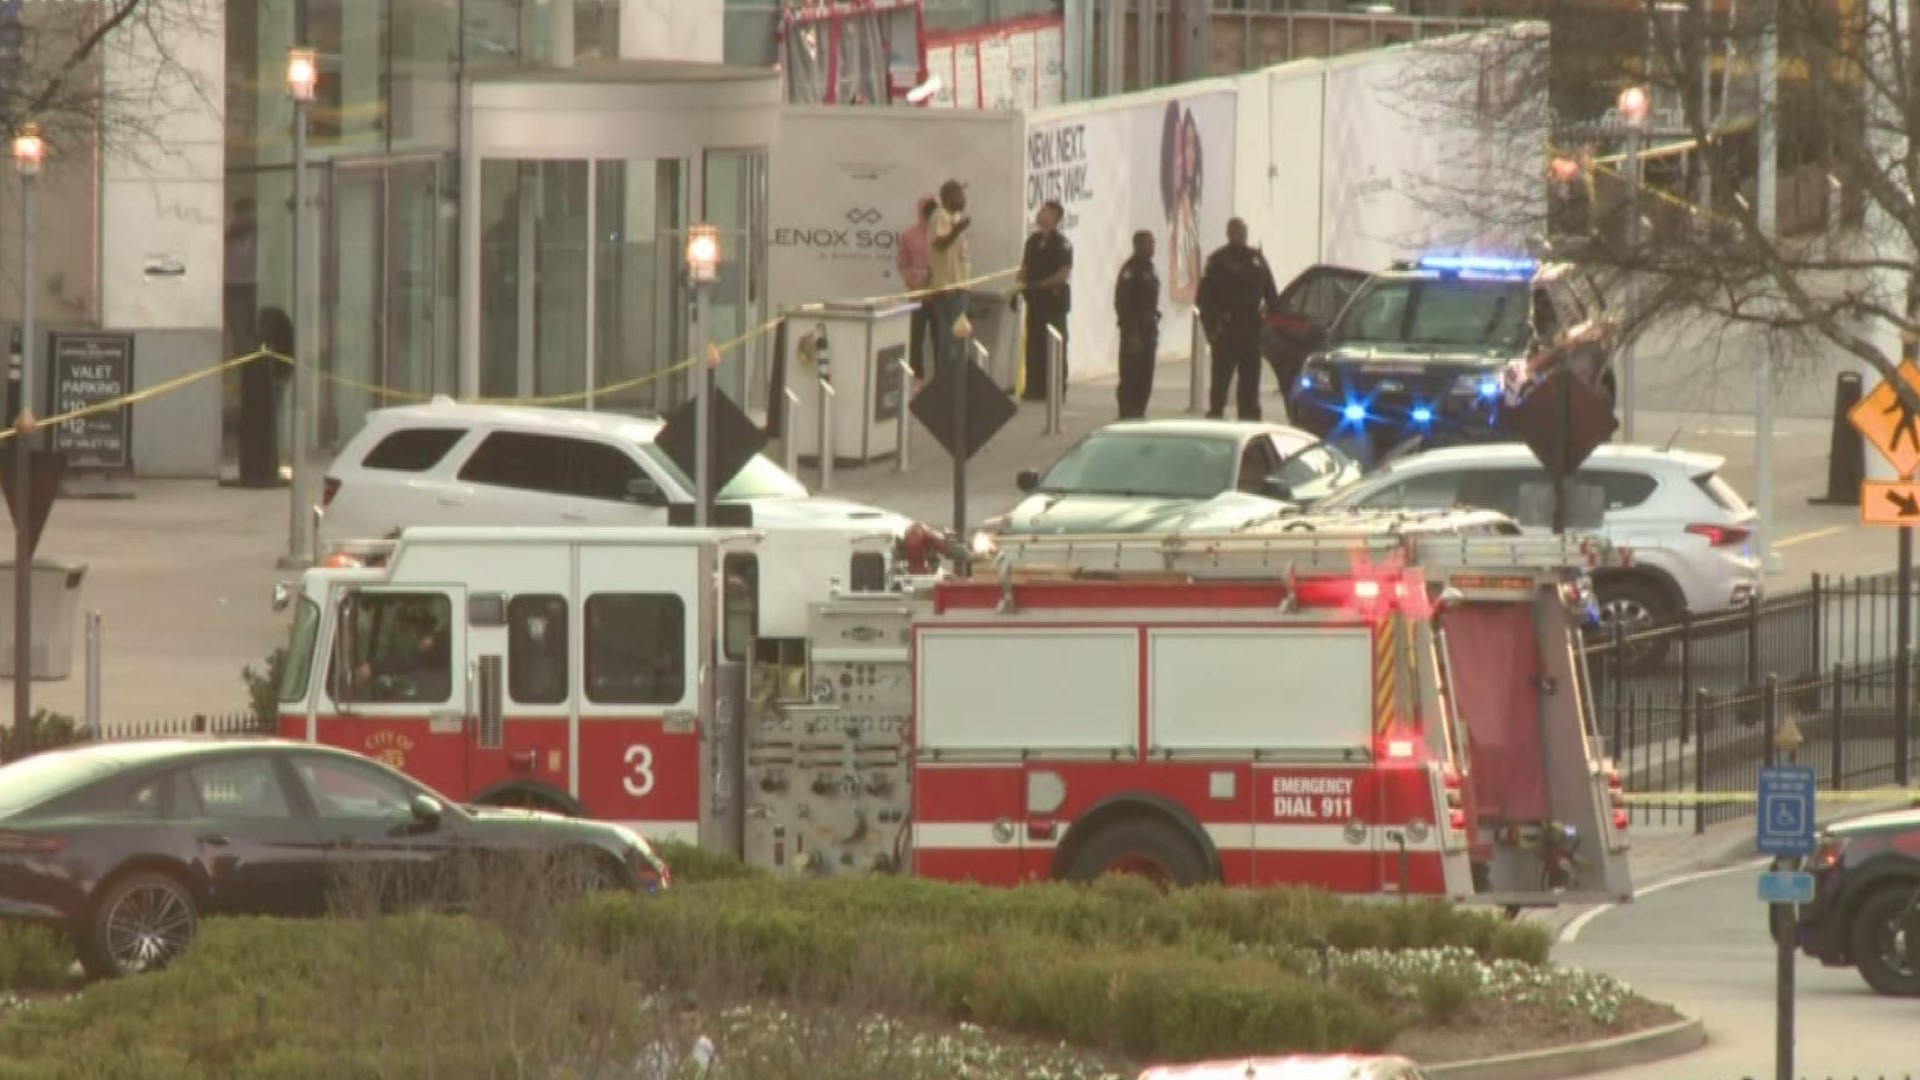 Man shot while leaving Lenox Square Mall, police say – WSB-TV